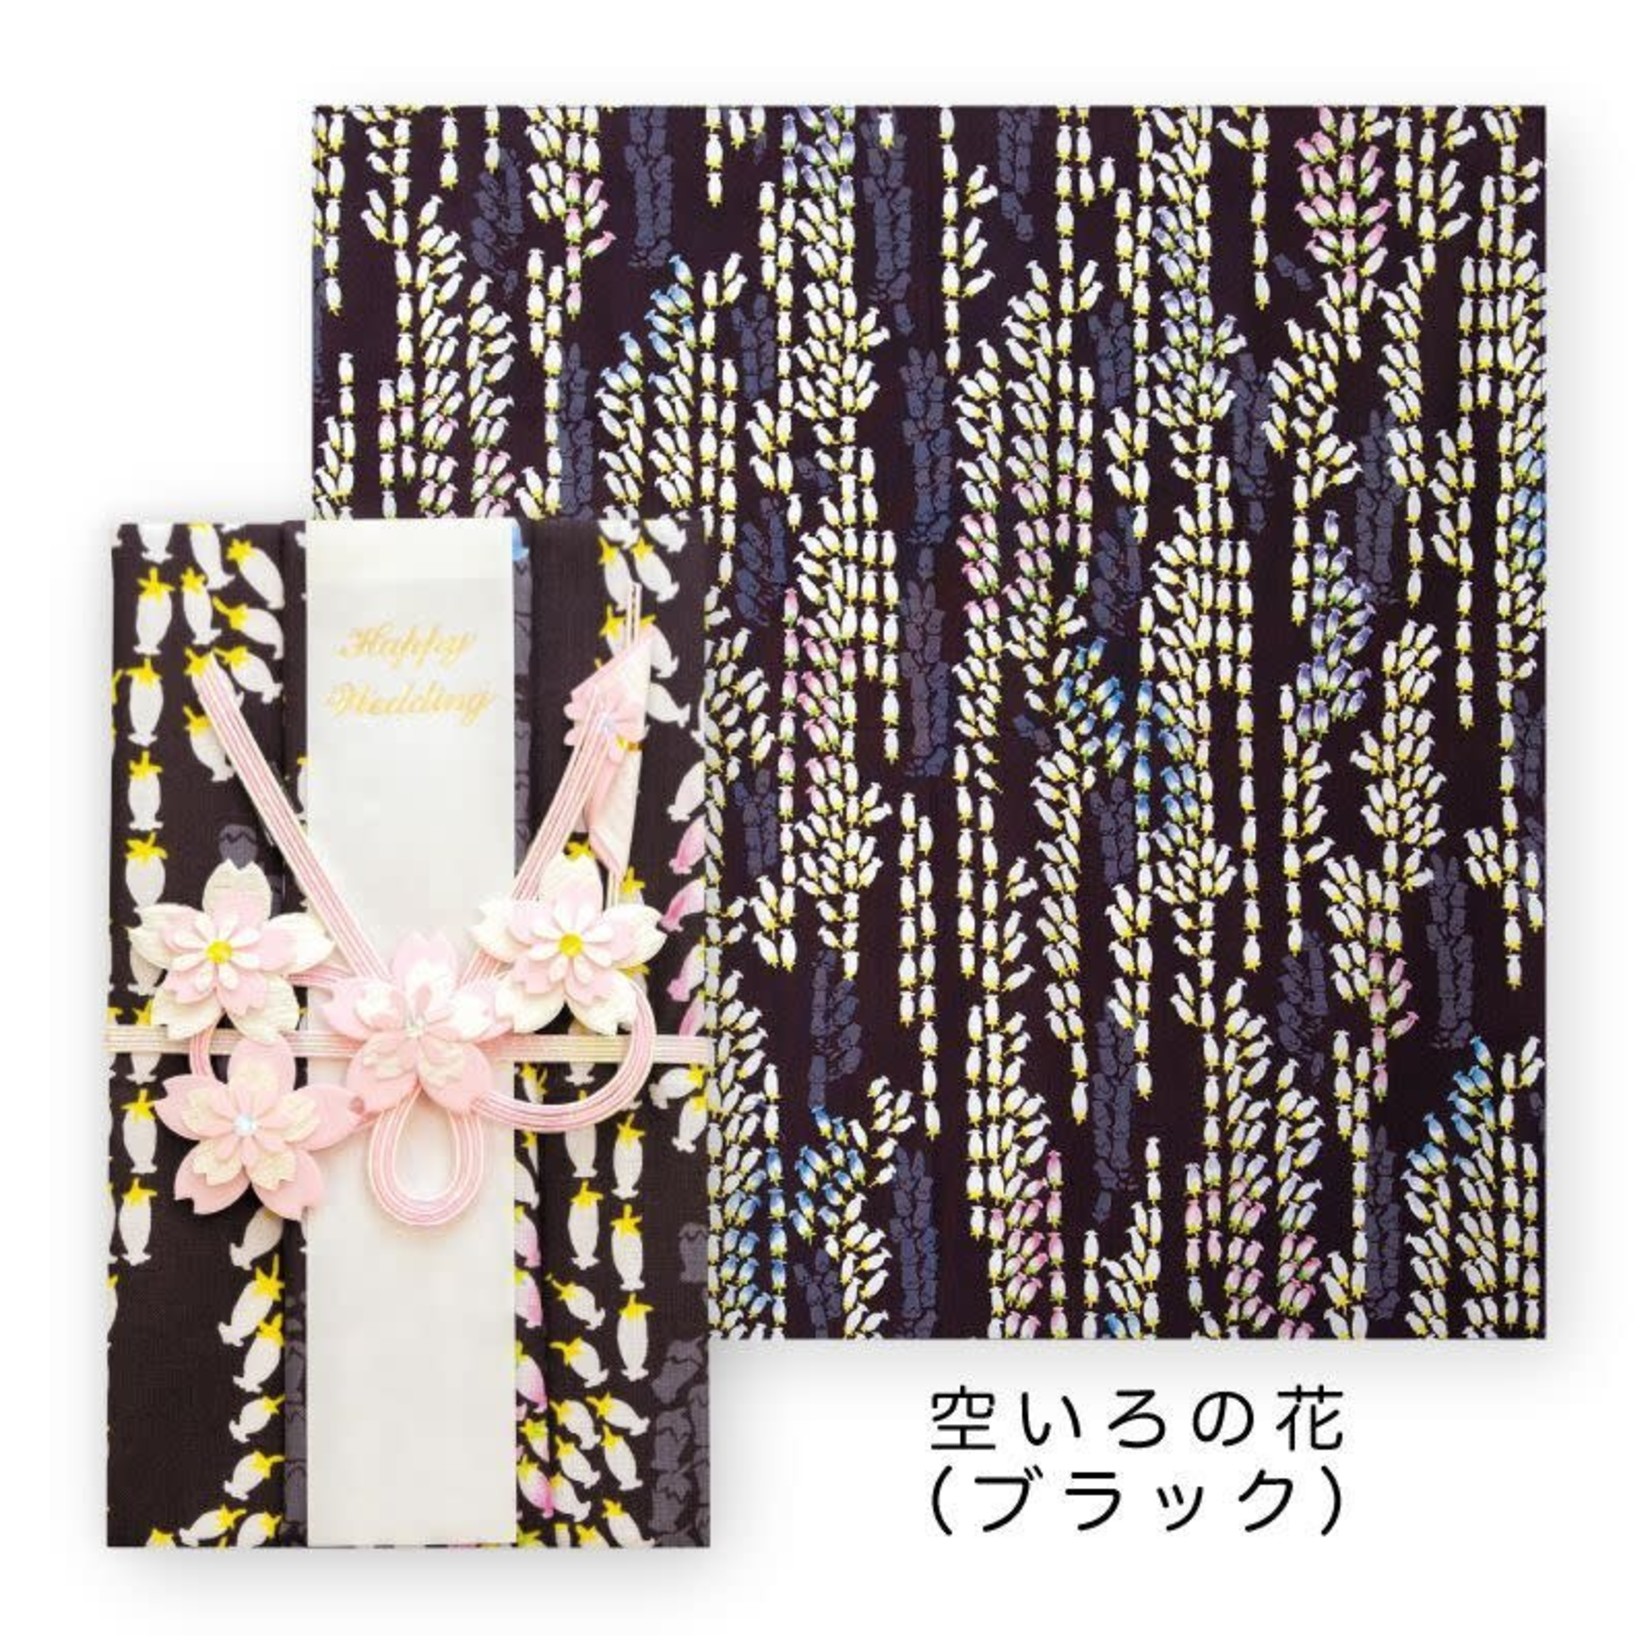 Handkerchief - Misuzu Uta - gift bag